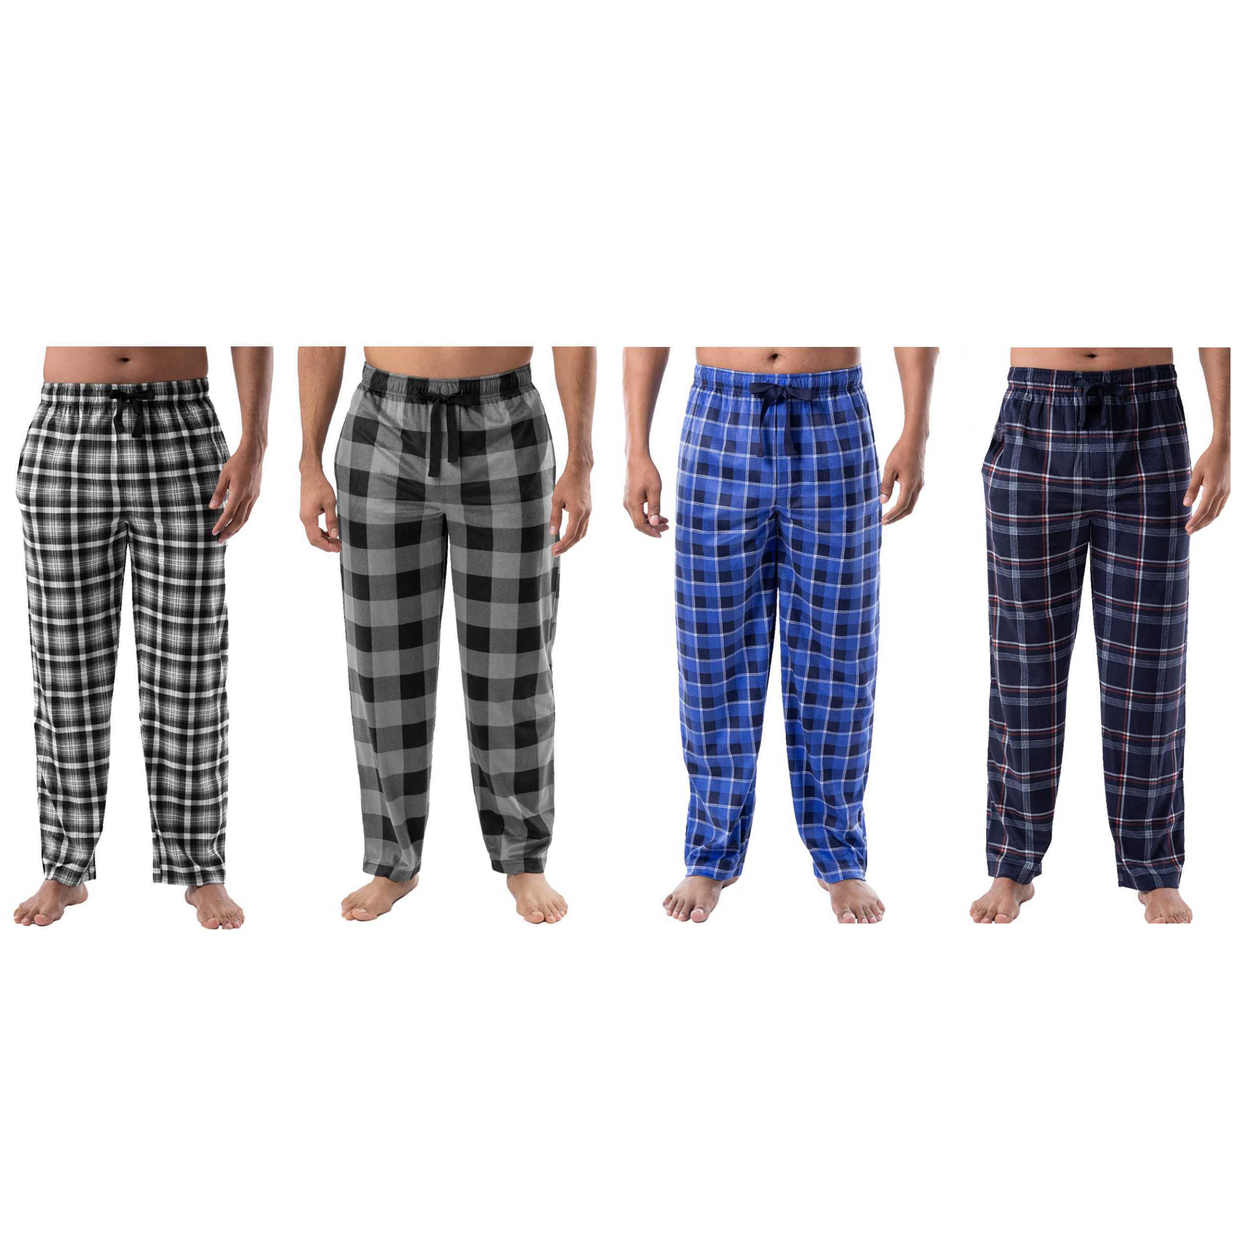 4-Pack: Men's Ultra-Soft Cozy Lounge Sleep Micro Fleece Plaid Pajama Pants - Medium